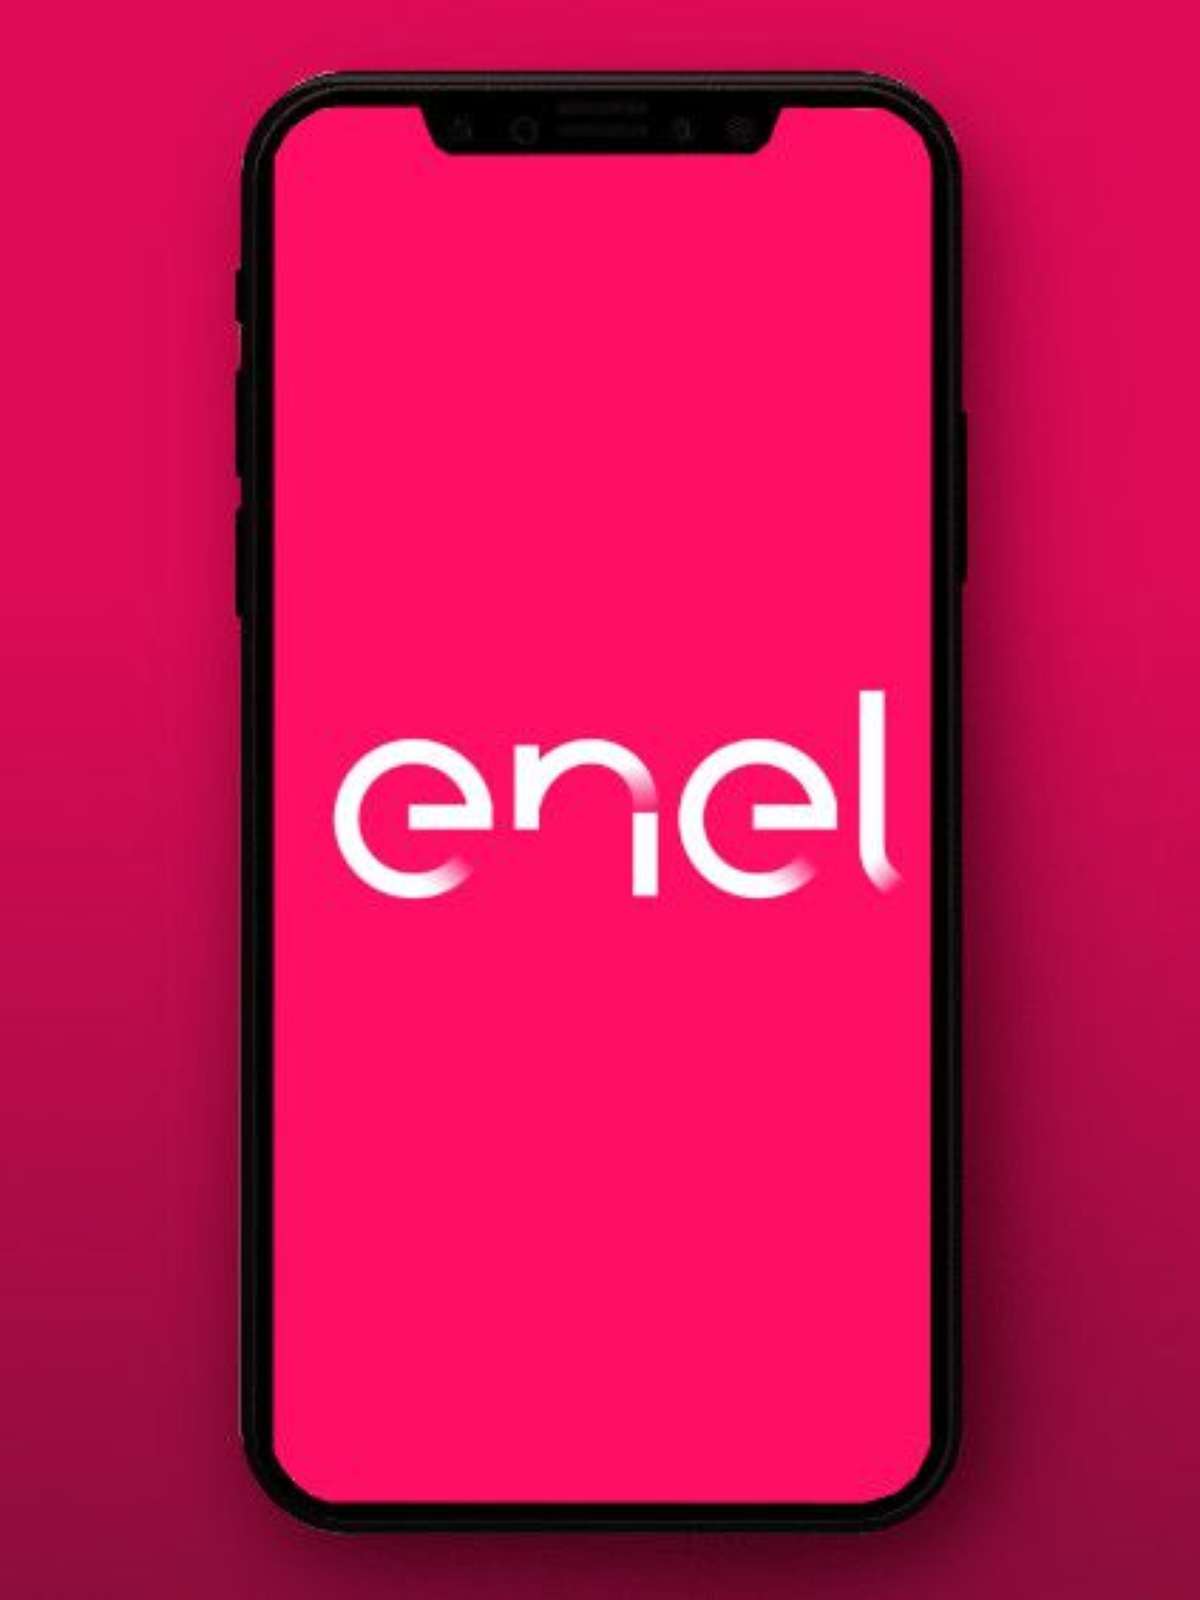 ENEL 2 VIA : Veja como emitir segunda via de conta Enel 